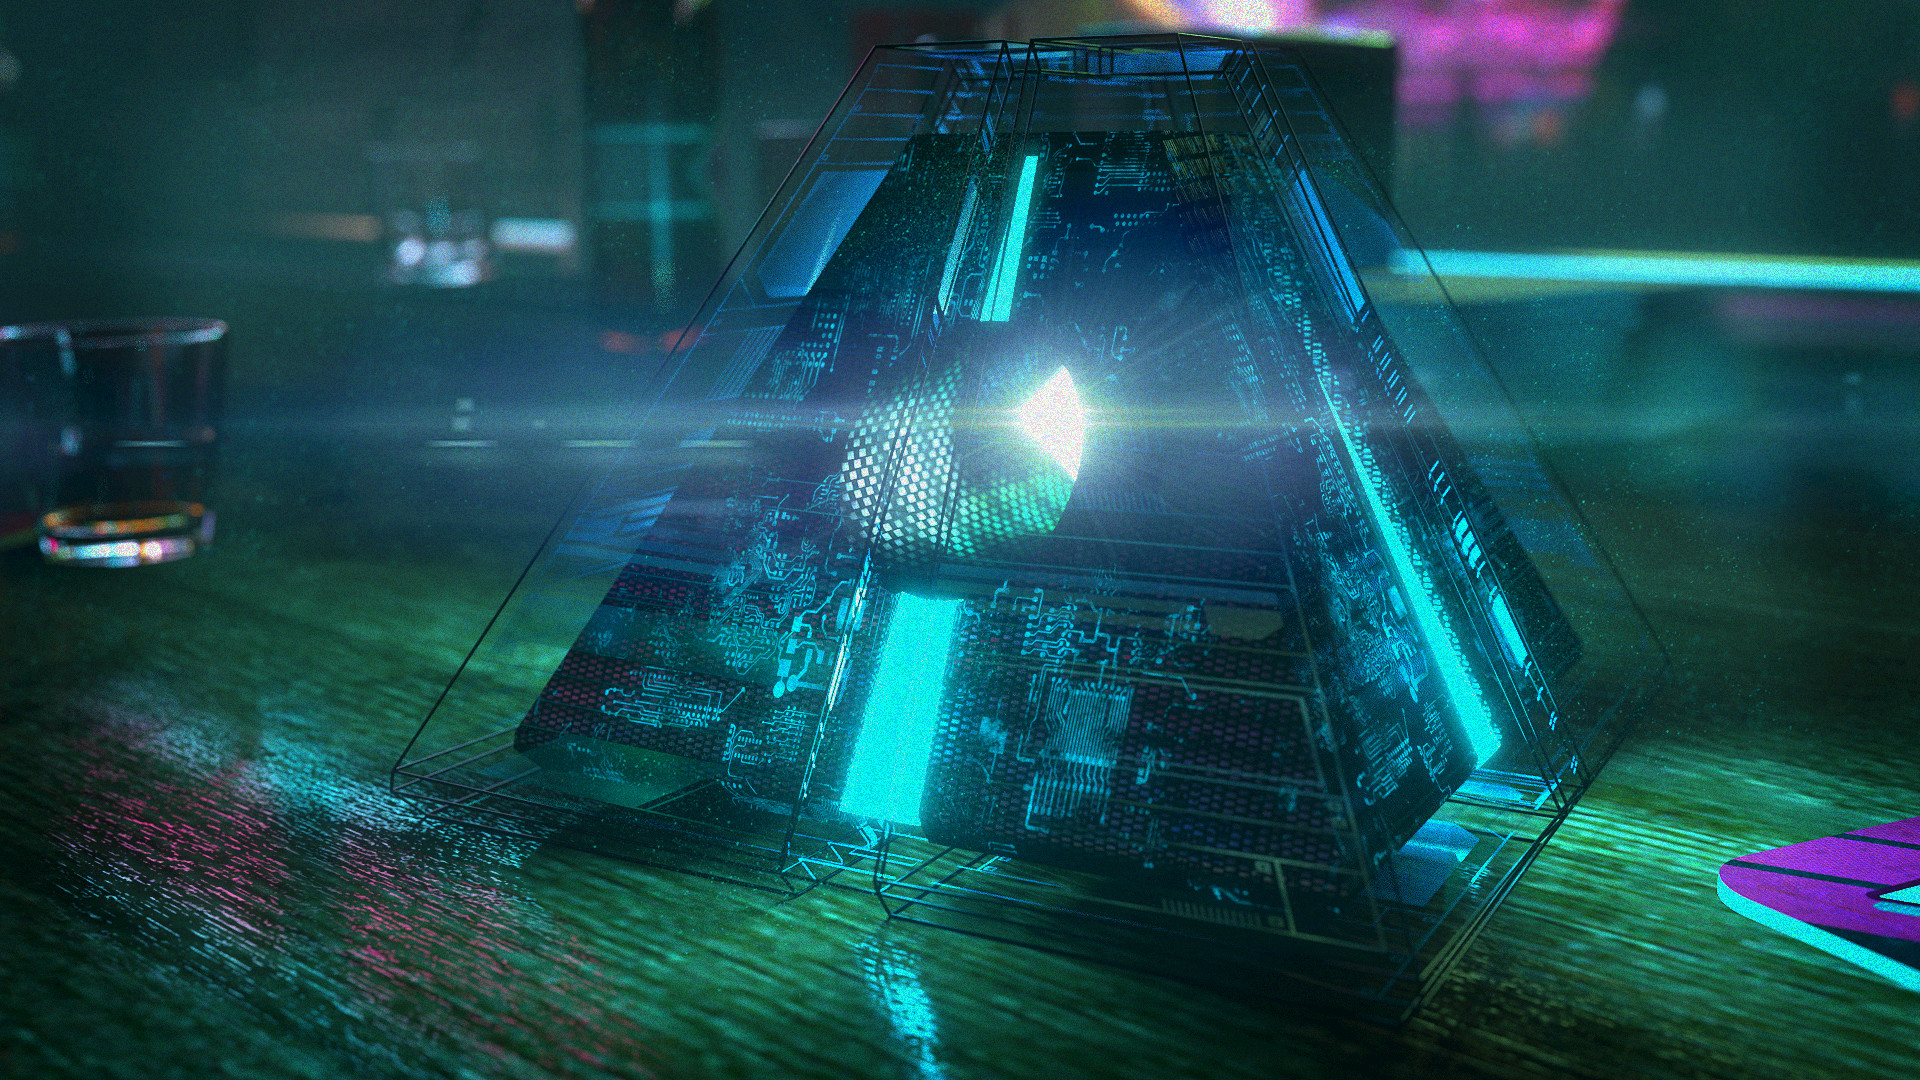 David Legnon Cyberpunk Artifacts Science Fiction Blue Light Pyramid Glass Circuits Glowing Digital A 1920x1080